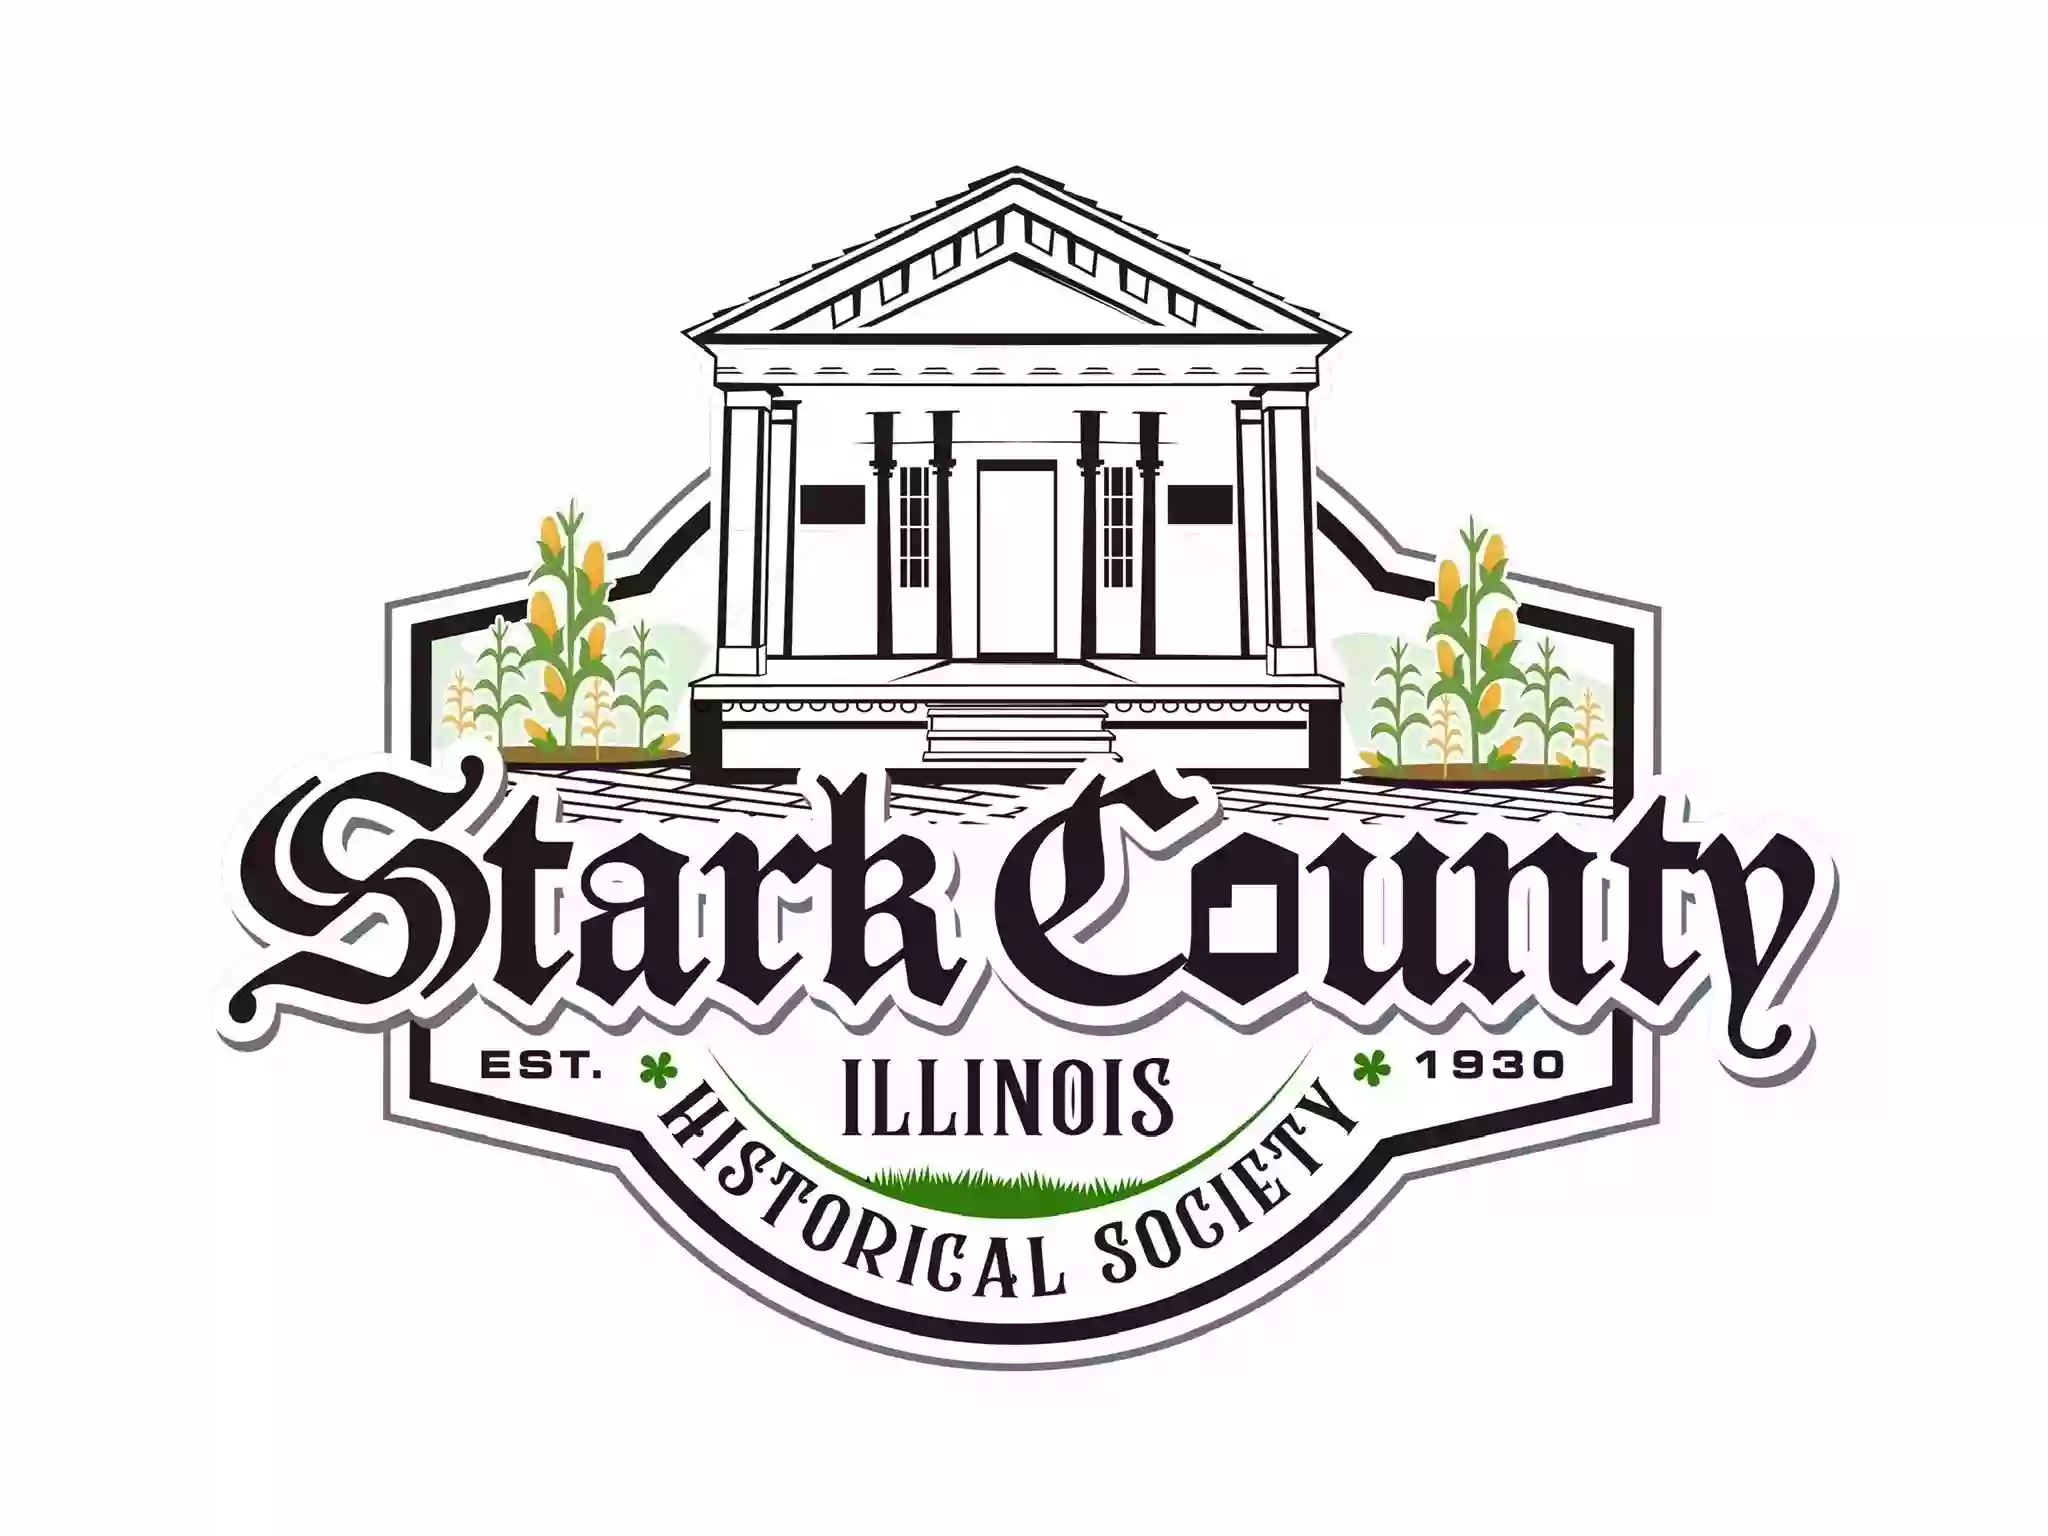 Stark County Illinois Historical Society